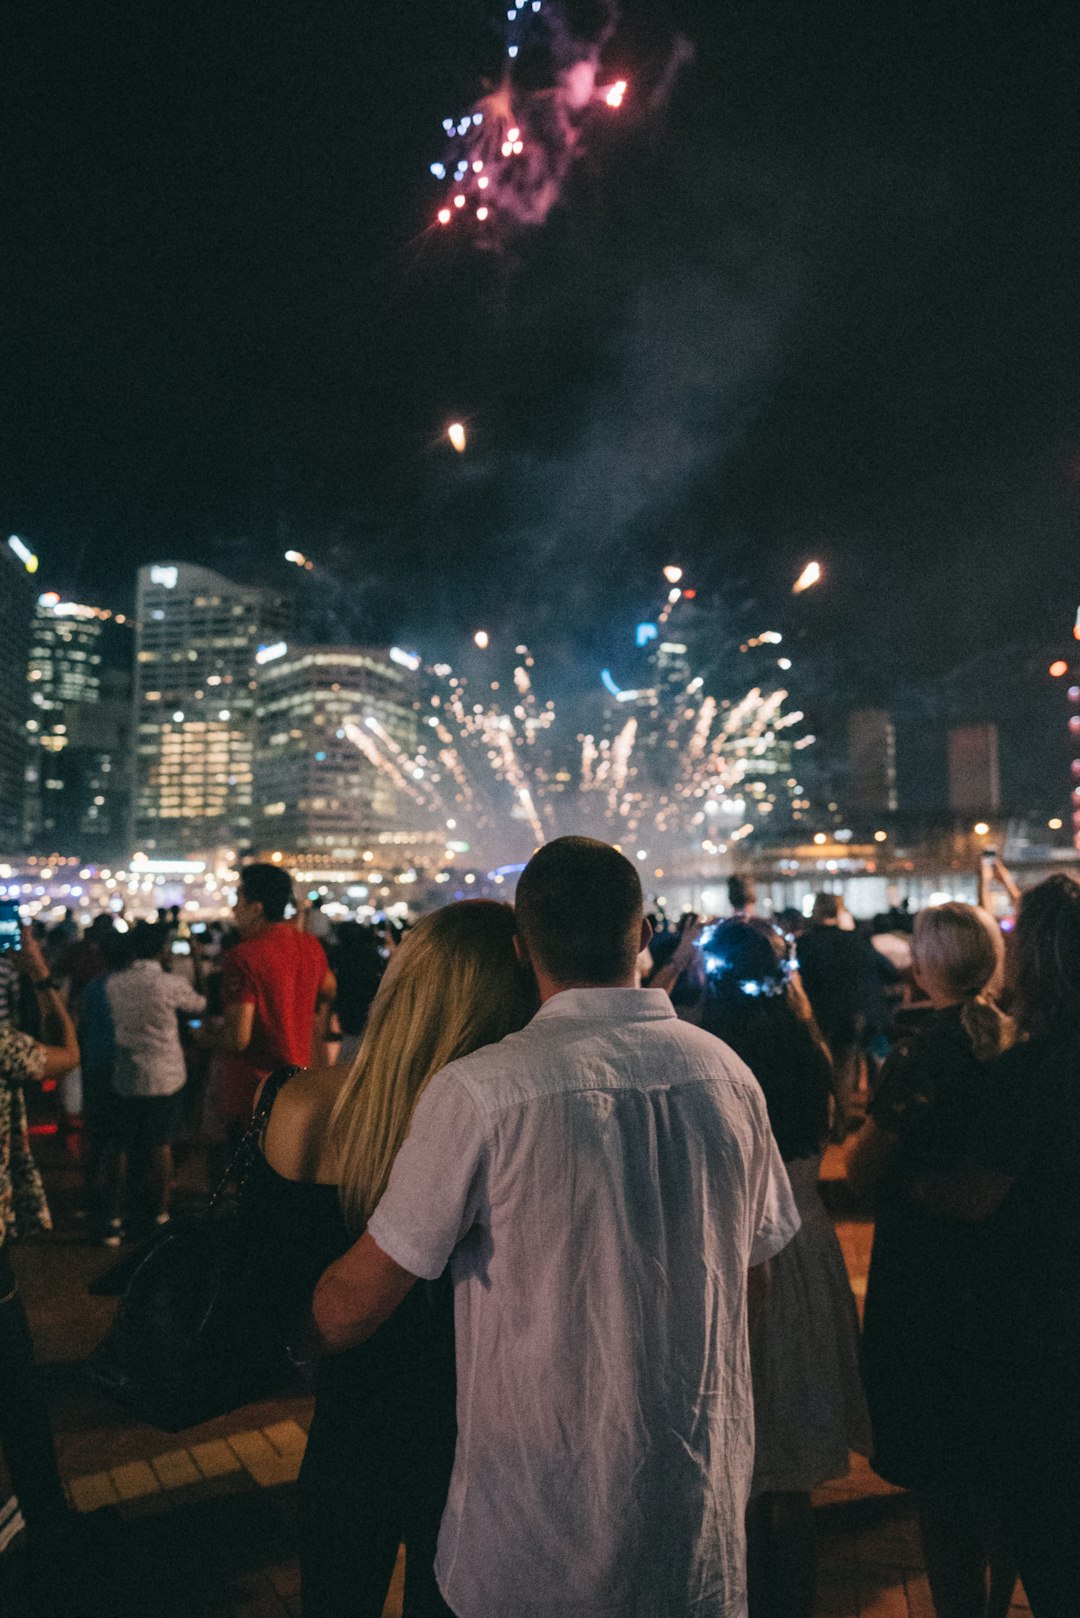 group of people watching fireworks display